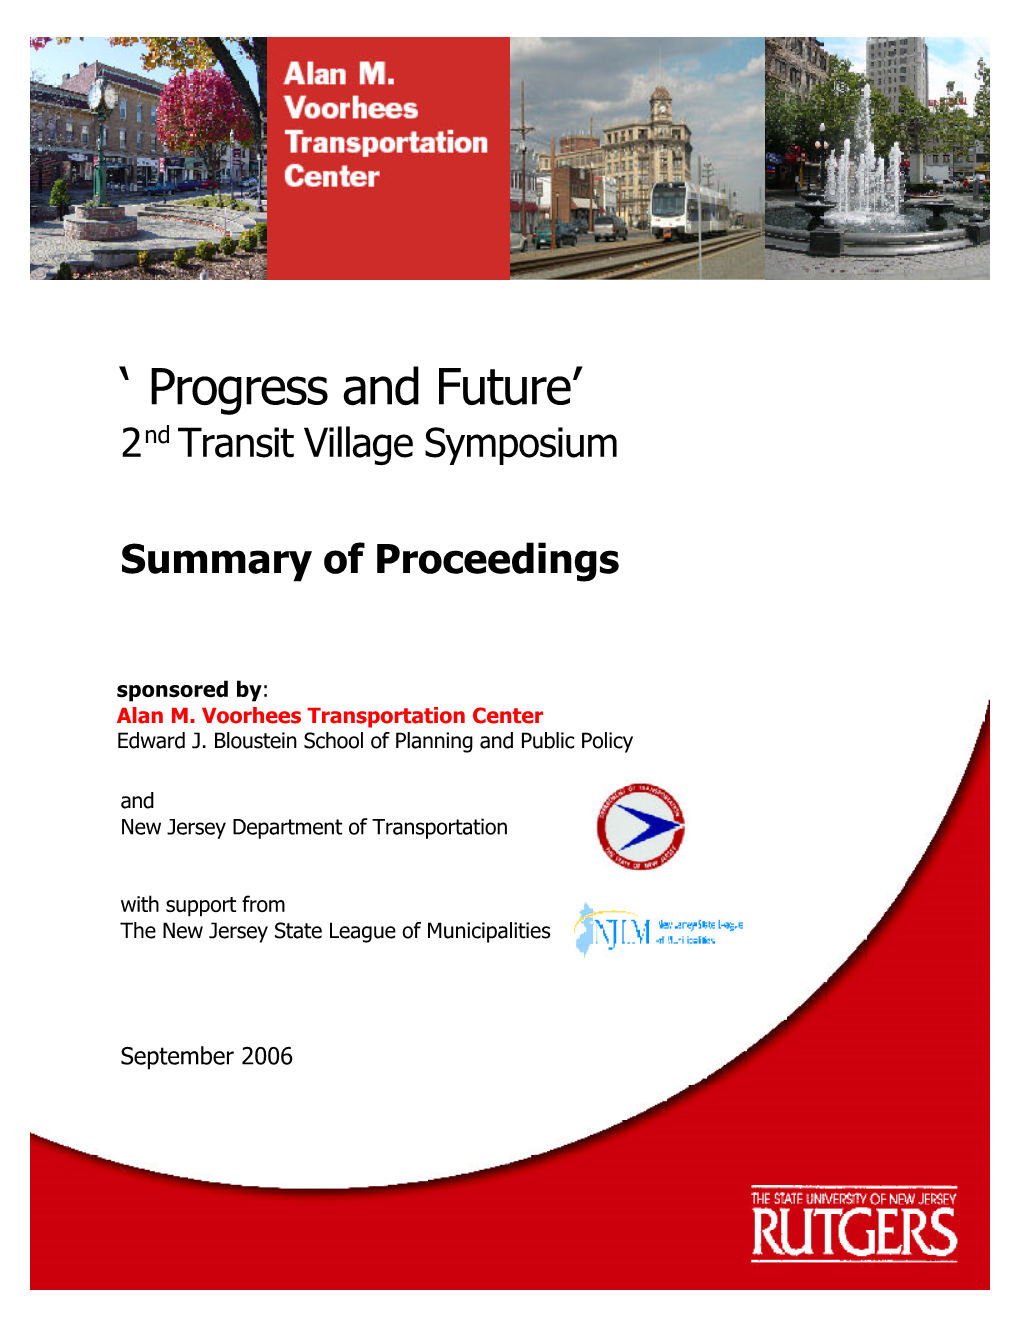 Transit Village Symposium: “Progress and Future”